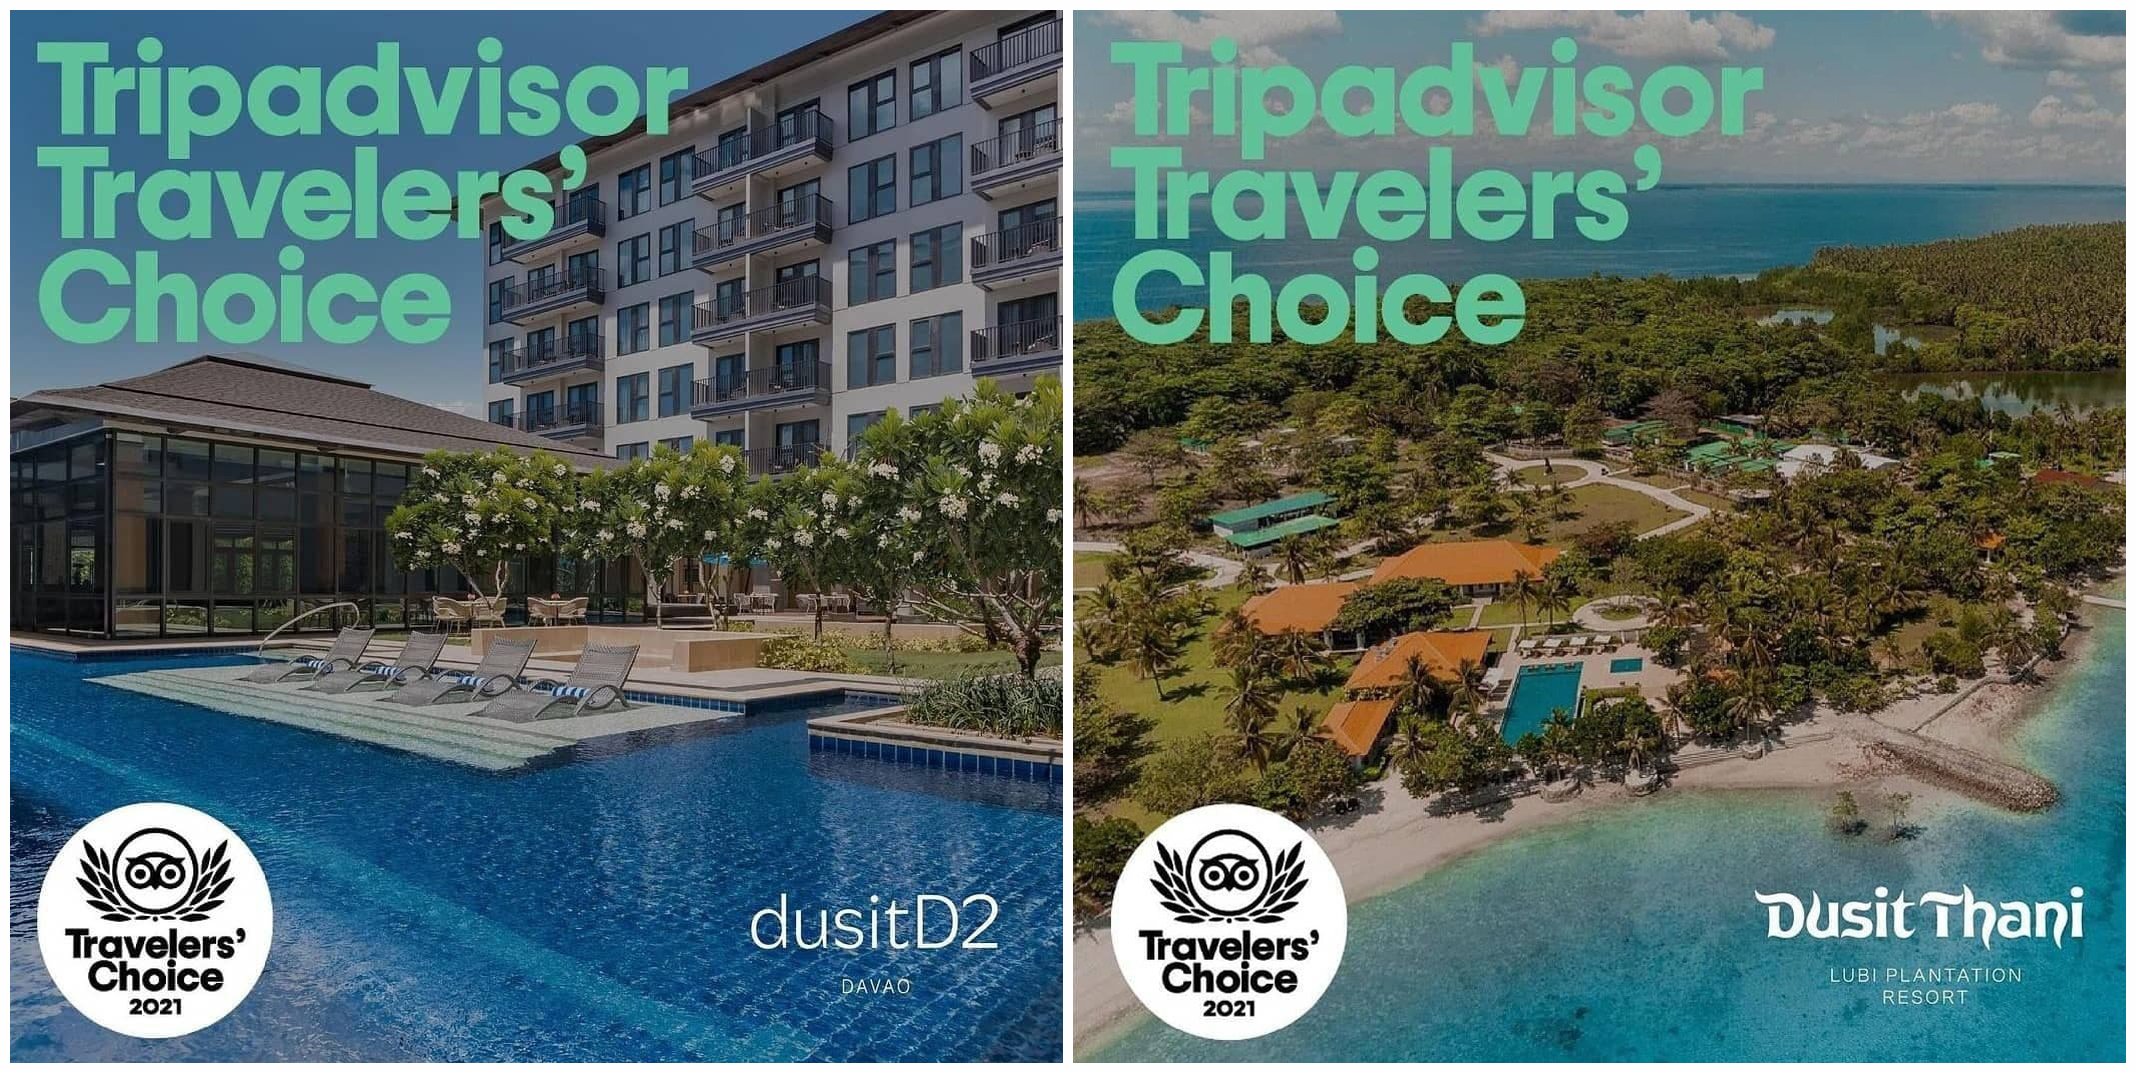 Travelers' Choice Awardee 2021 Dusit Thani Lubi Plantation Resort Davao and dusitD2 Davao 